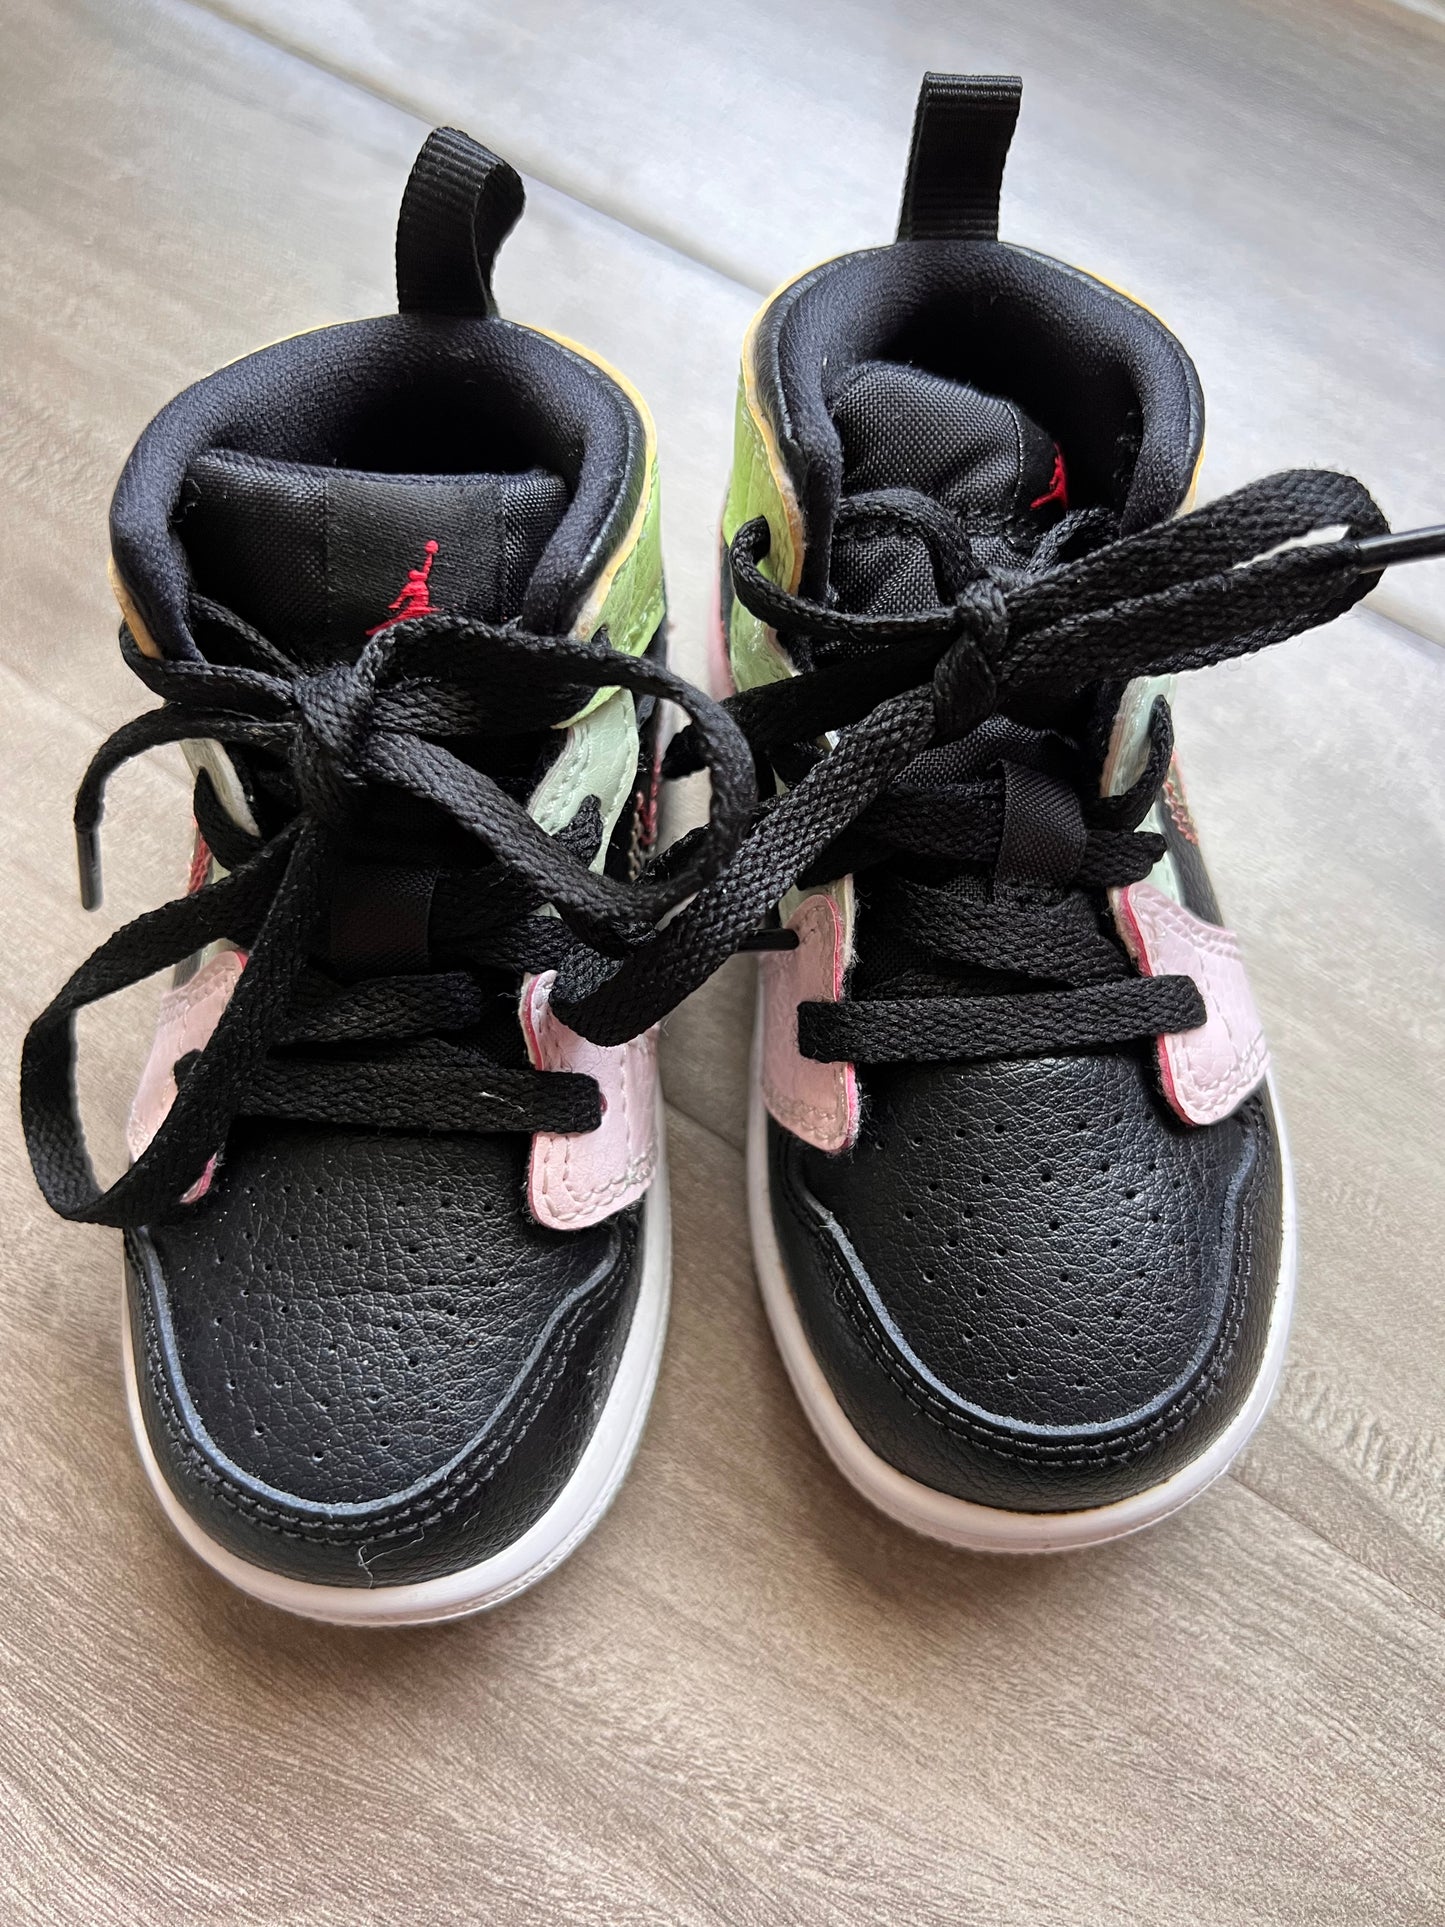 Girls (OR Boys) 6 - Nike Jordans